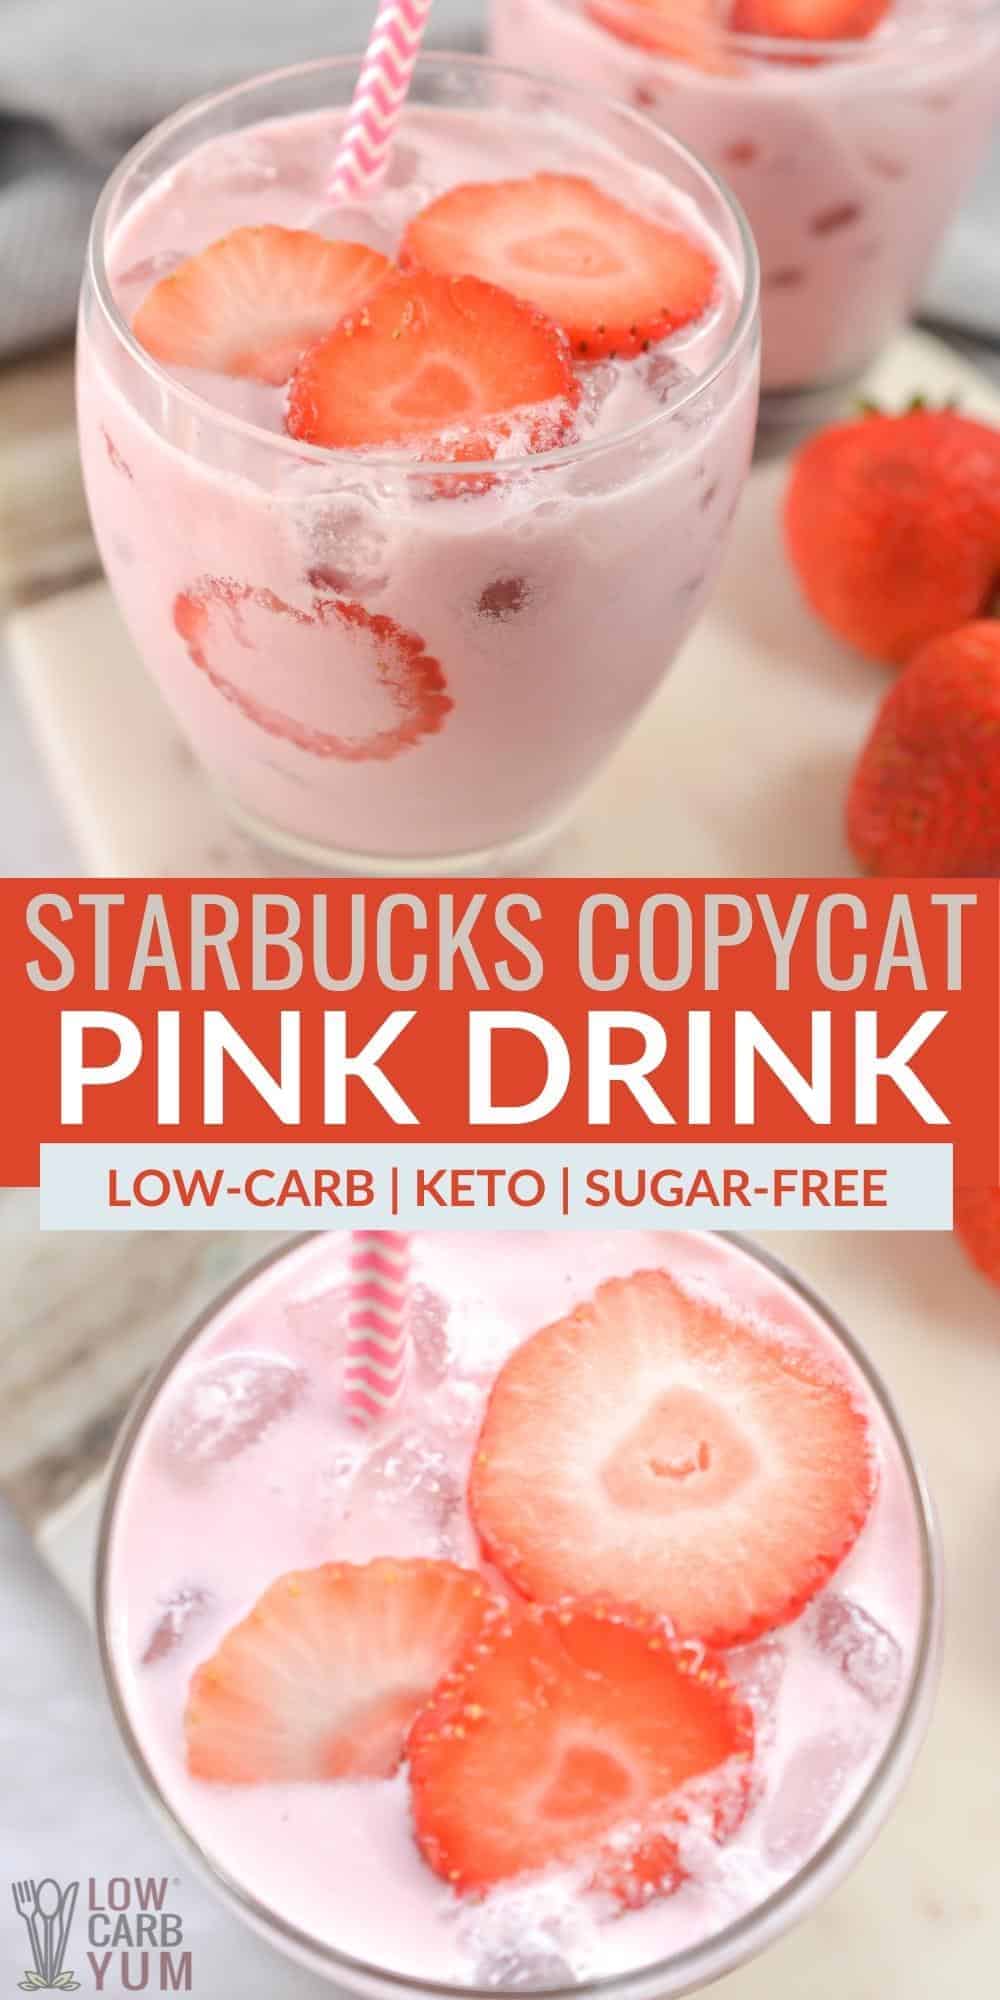 starbucks copycat keto pink drink pinterest image.